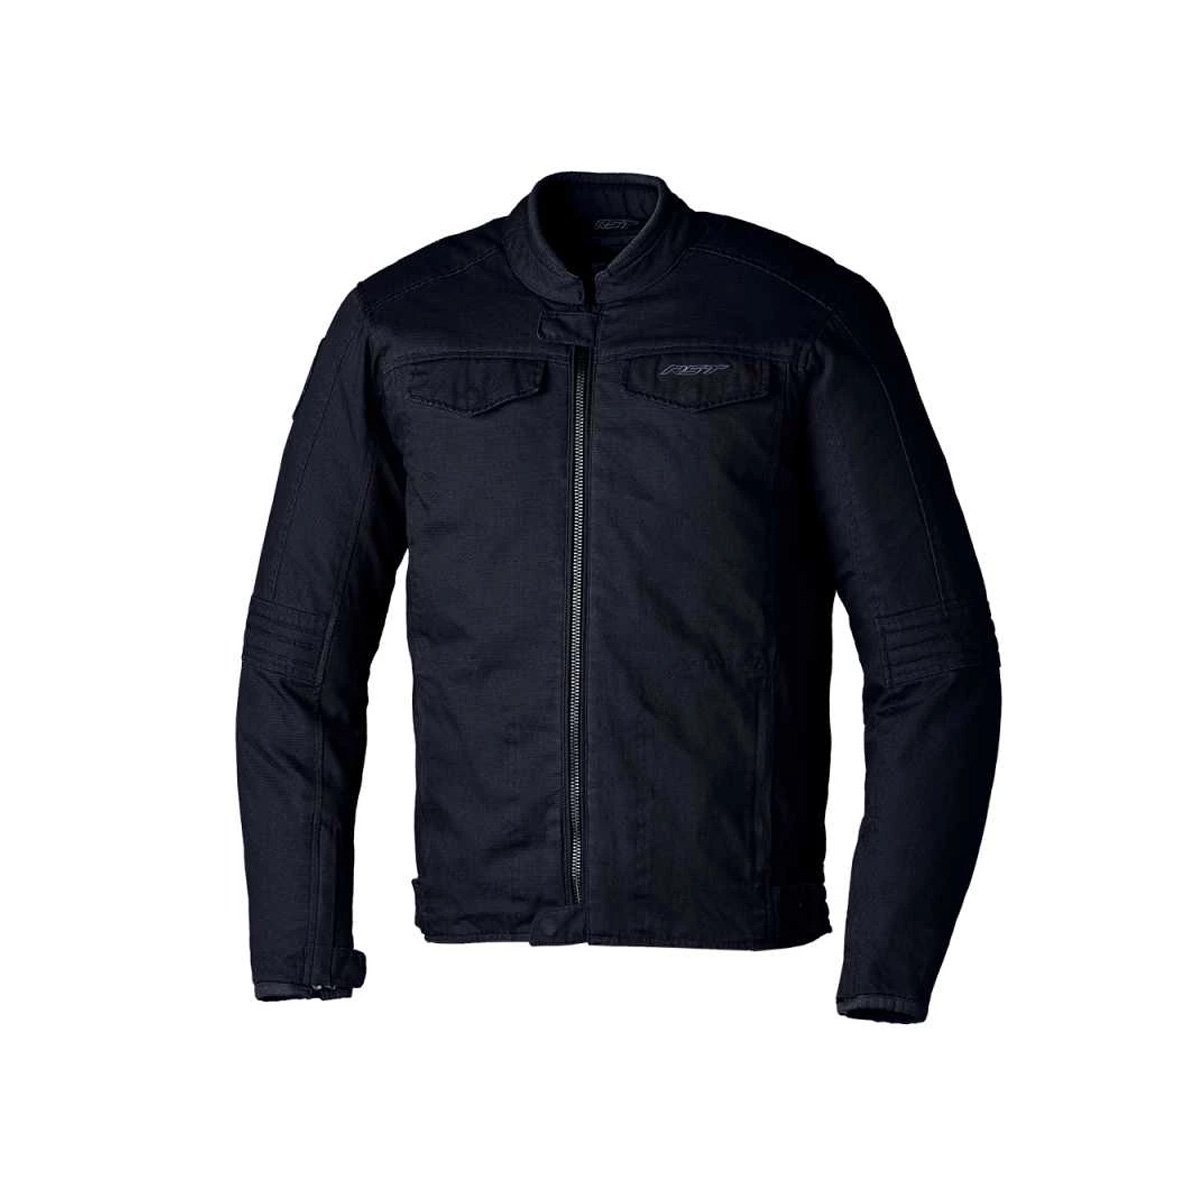 Image of RST IOM TT Crosby 2 CE Textile Jacket Men Black Size 40 ID 5056558112196